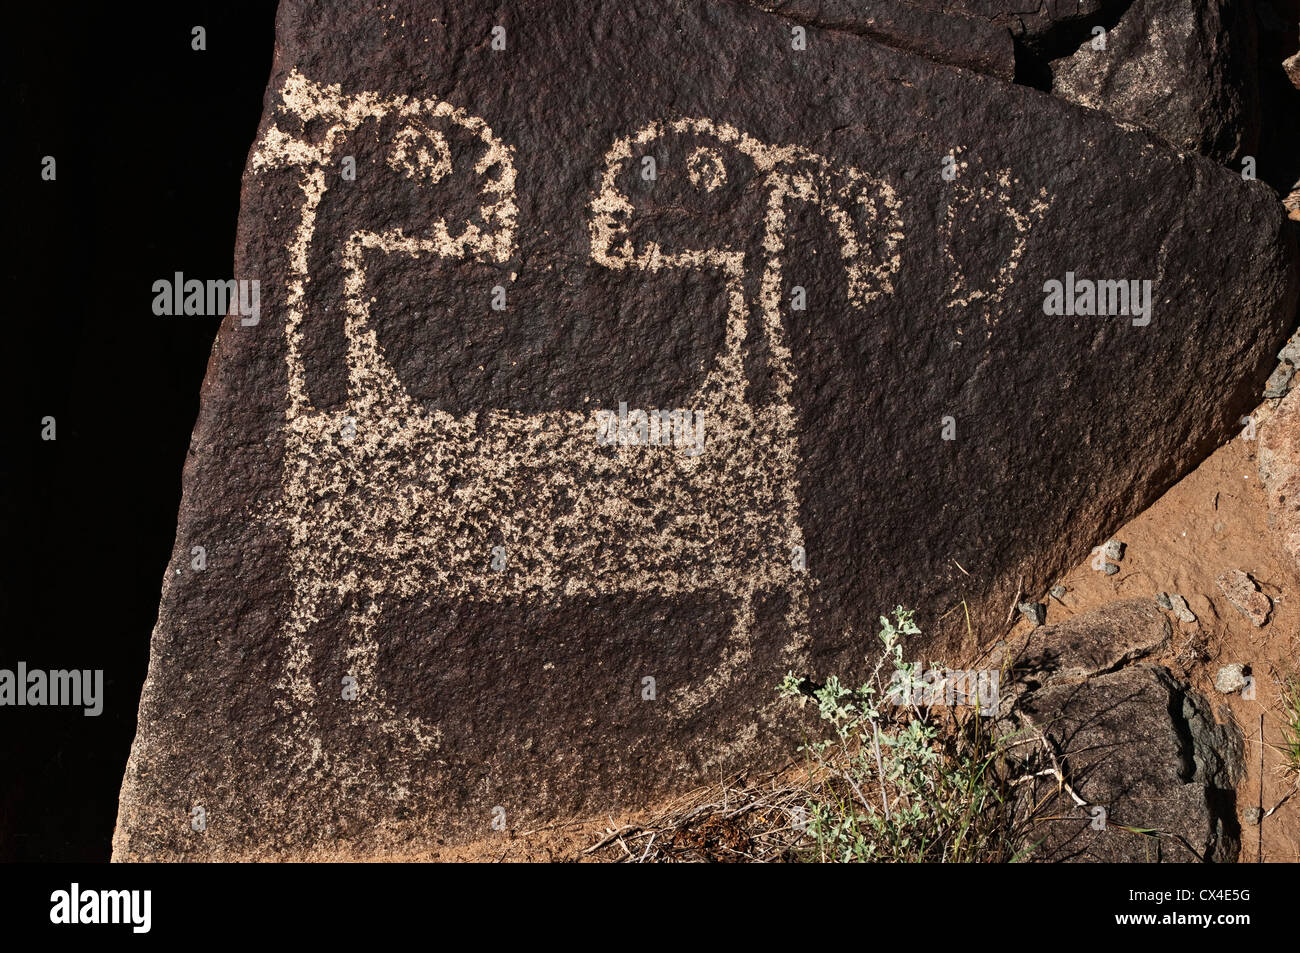 Two-headed goat petroglyph, Jornada Mogollon style rock art at Three Rivers Petroglyph Site, near Sierra Blanca, New Mexico, USA Stock Photo